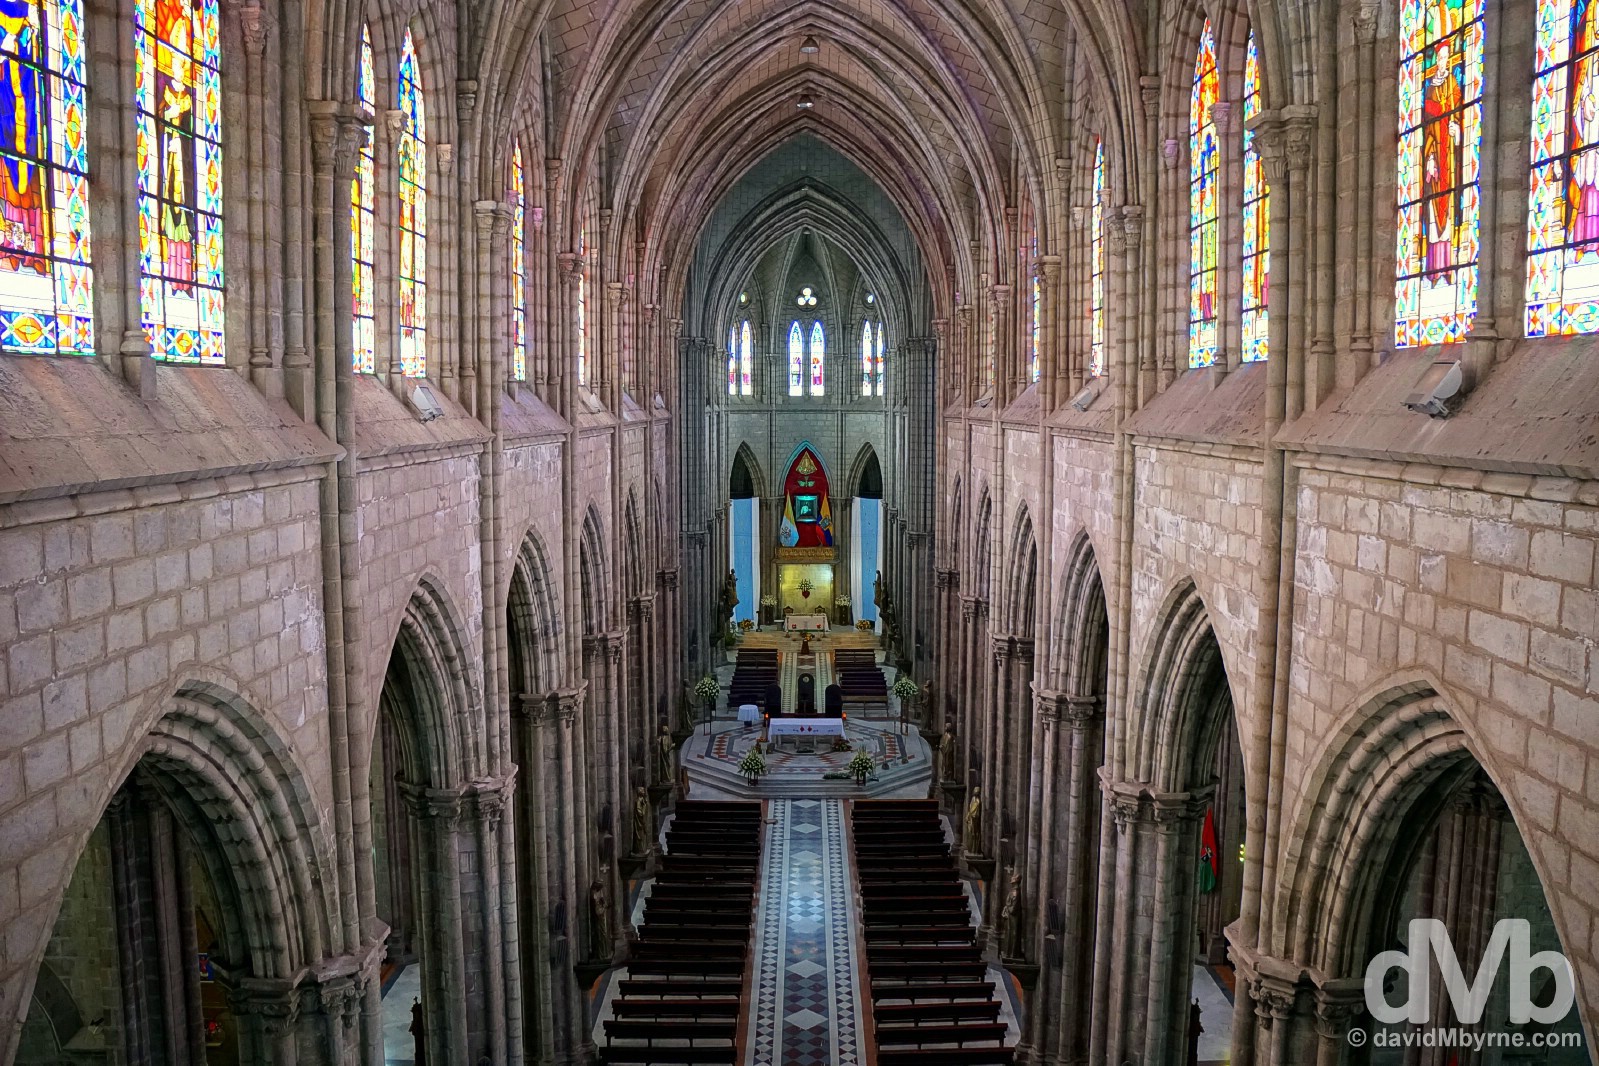 The interior of the Gothic Basilica del Voto Nacional in Quito, Ecuador. July 4, 2015.